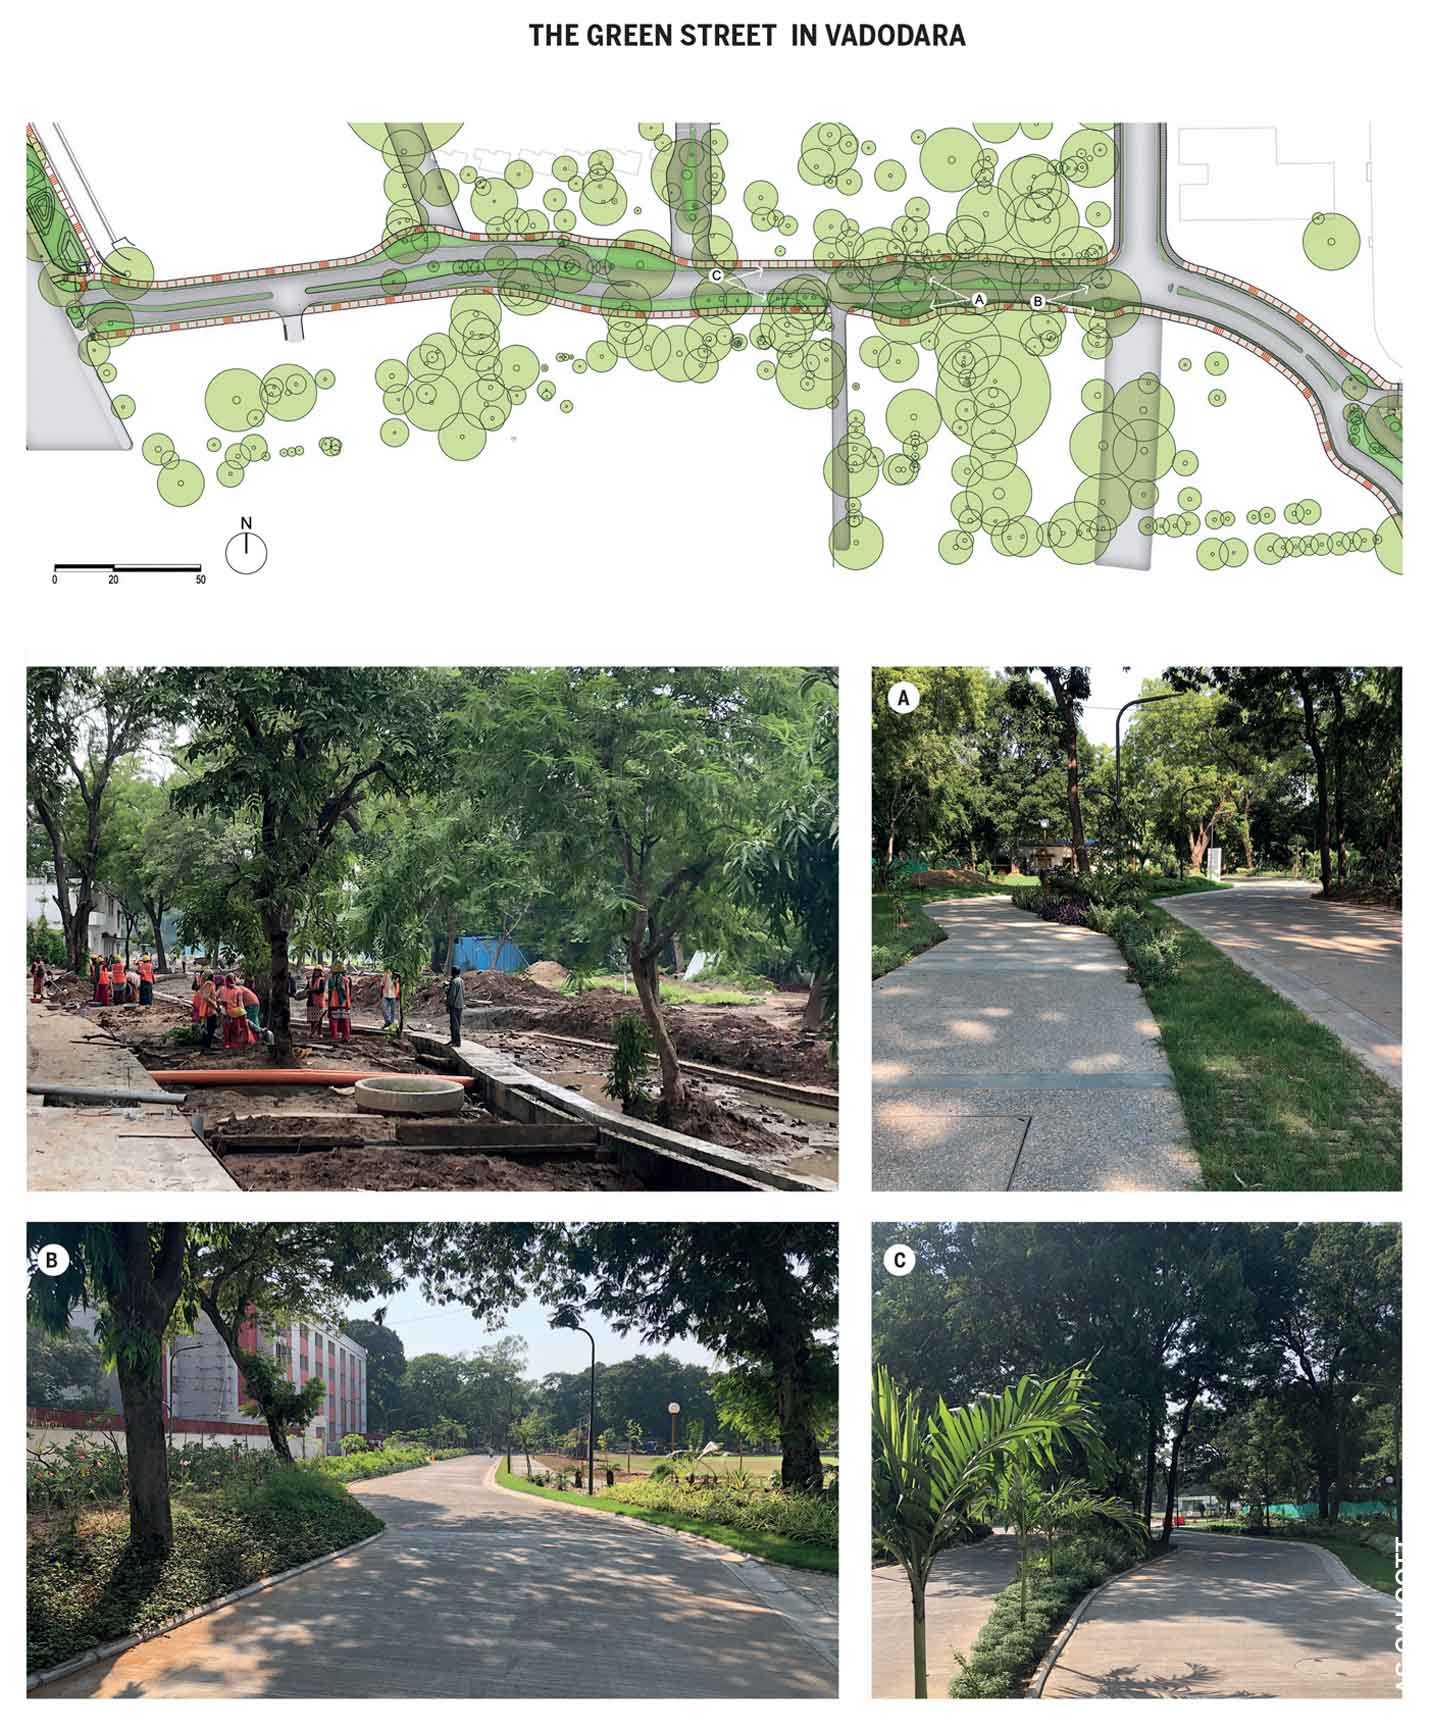 wiggling-roads-other-design-strategies-save-trees-green-street-vadodara